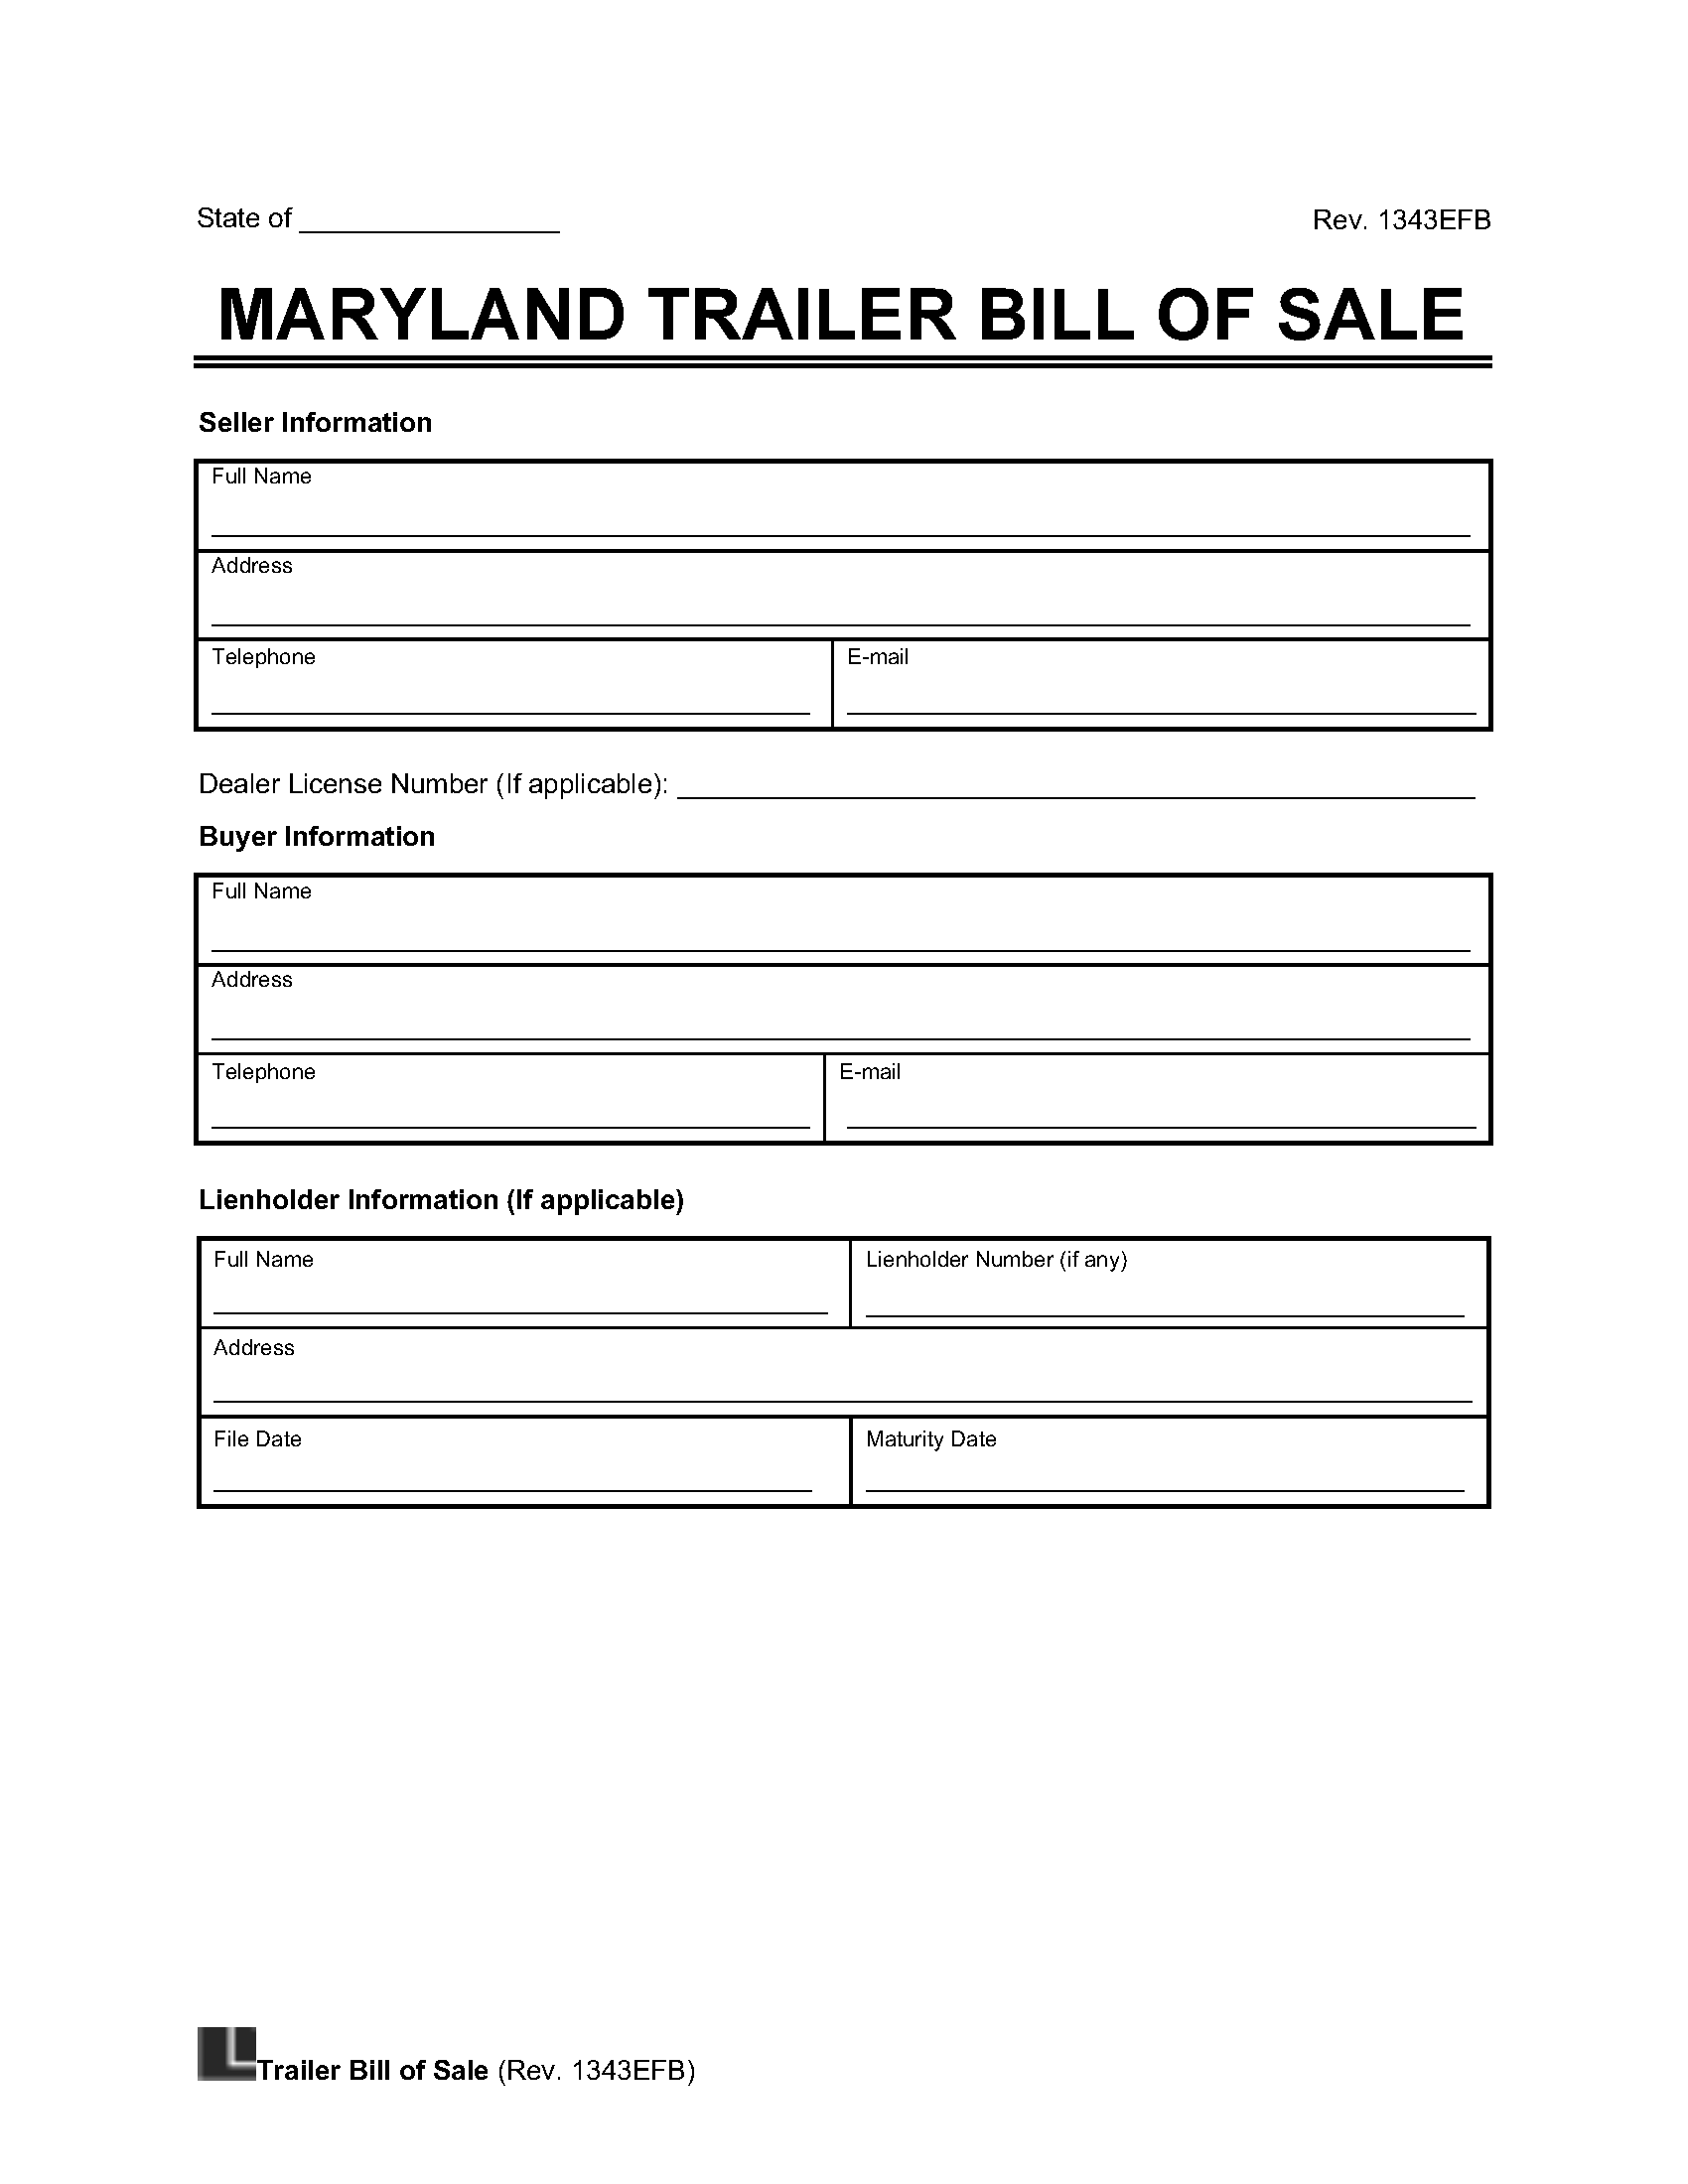 Maryland Trailer Bill of Sale screenshot